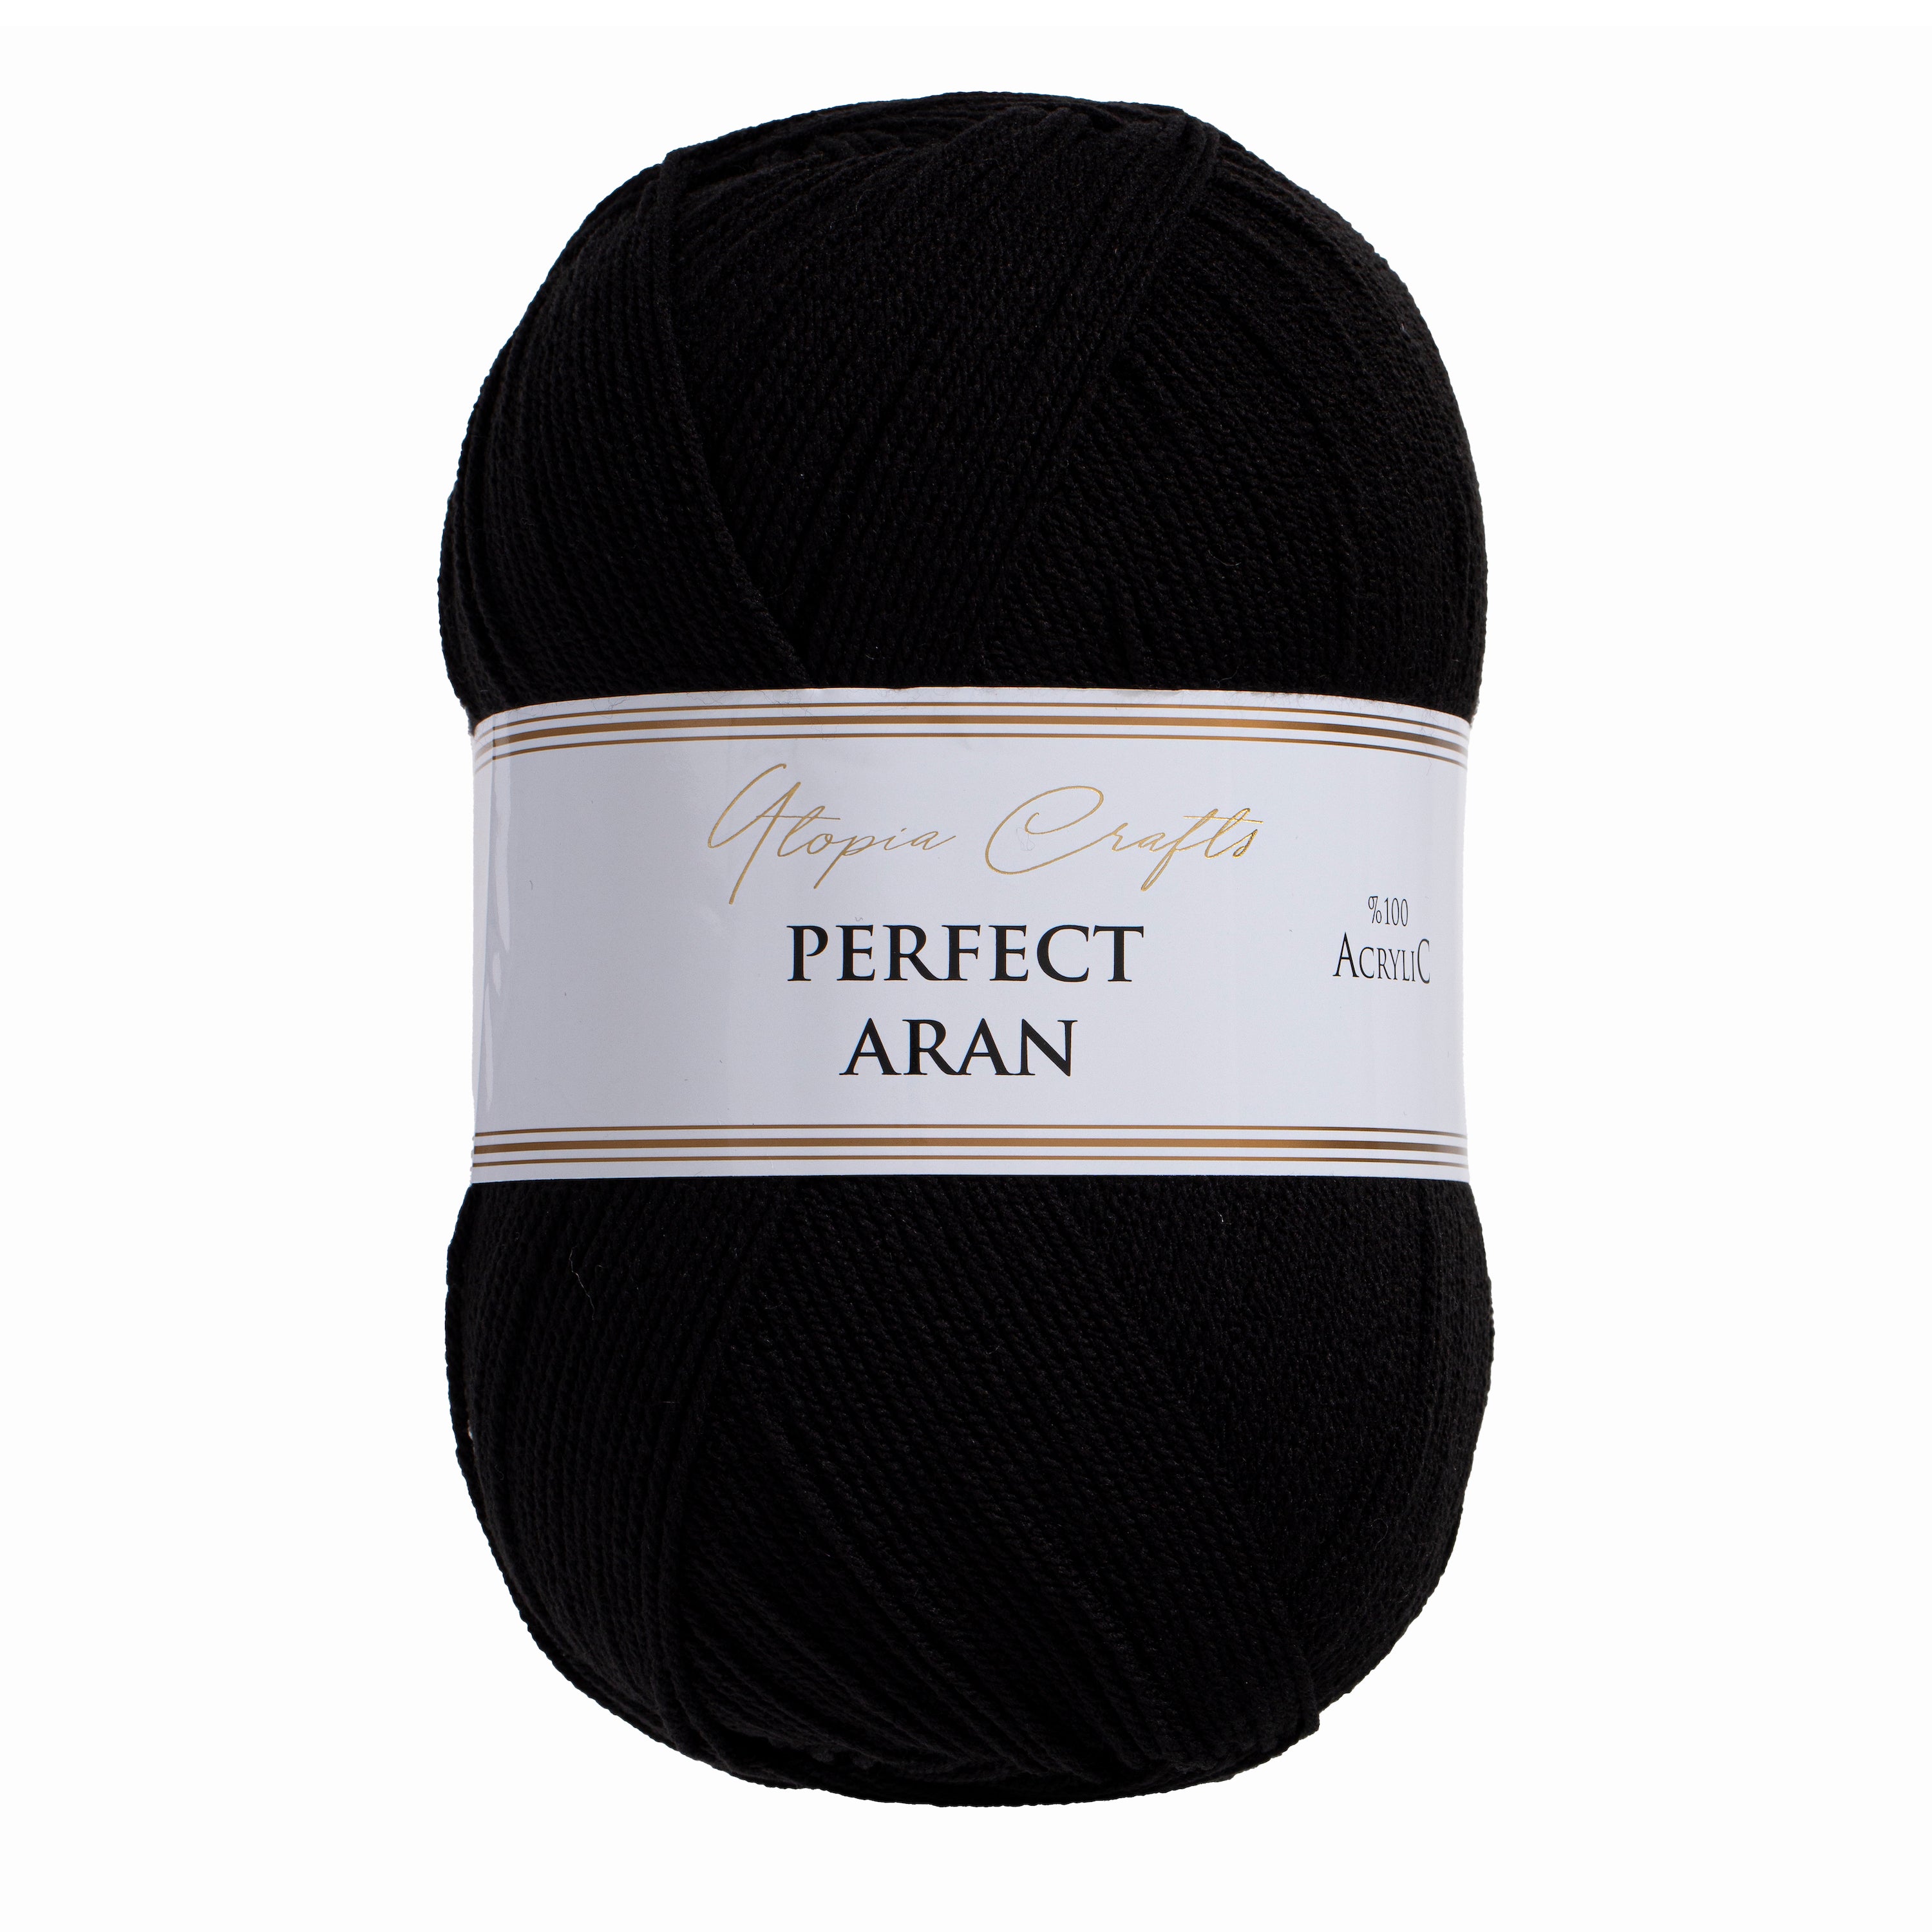 Utopia Crafts Aran Knitting and Crochet Yarn, 400g [Black]